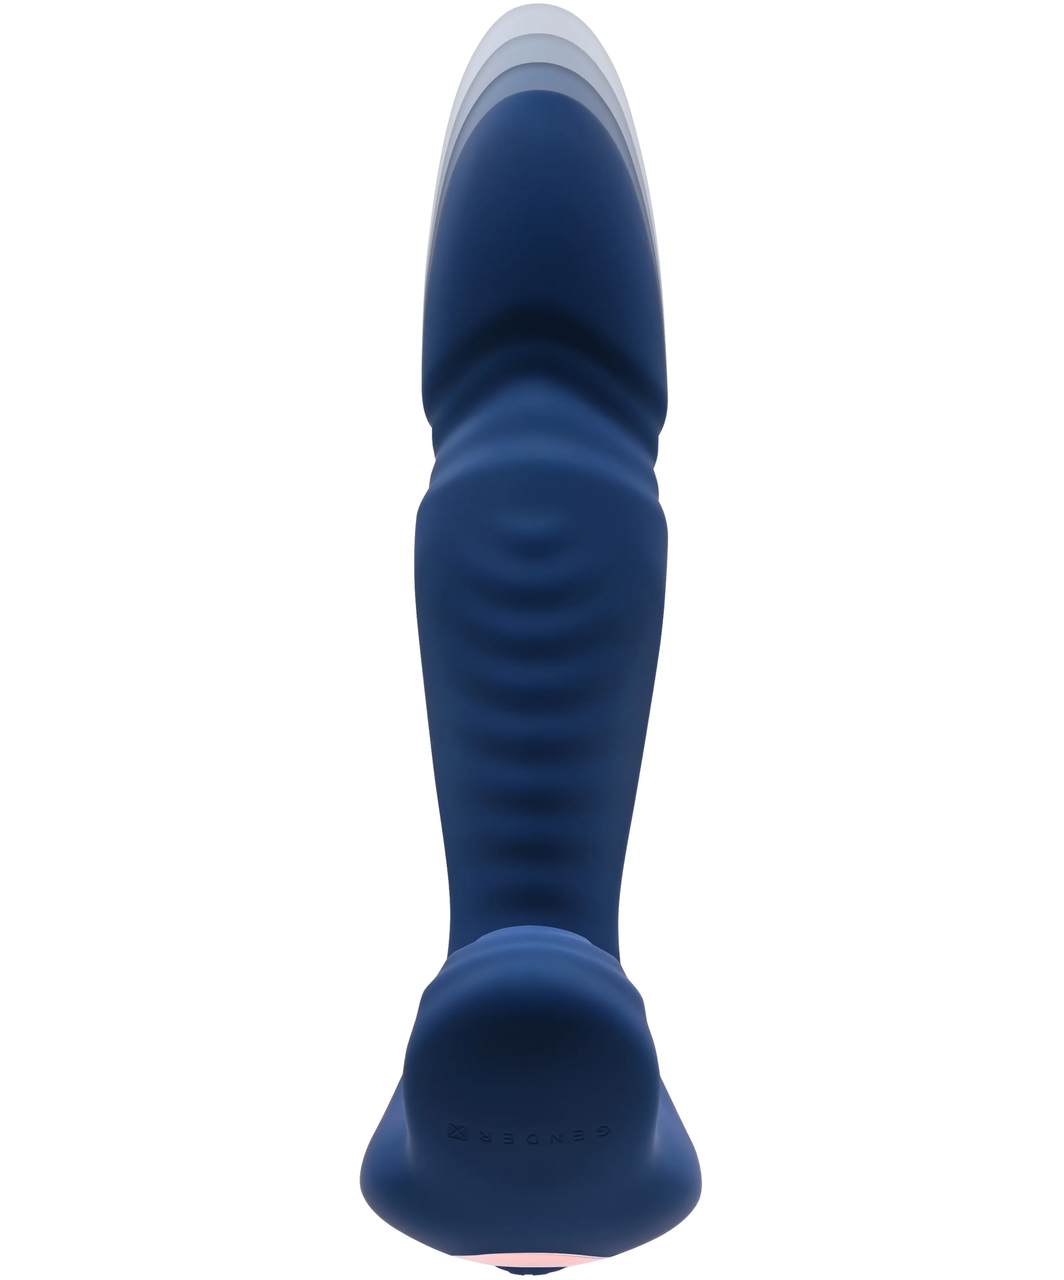 Gender X True Blue prostatas stimulators